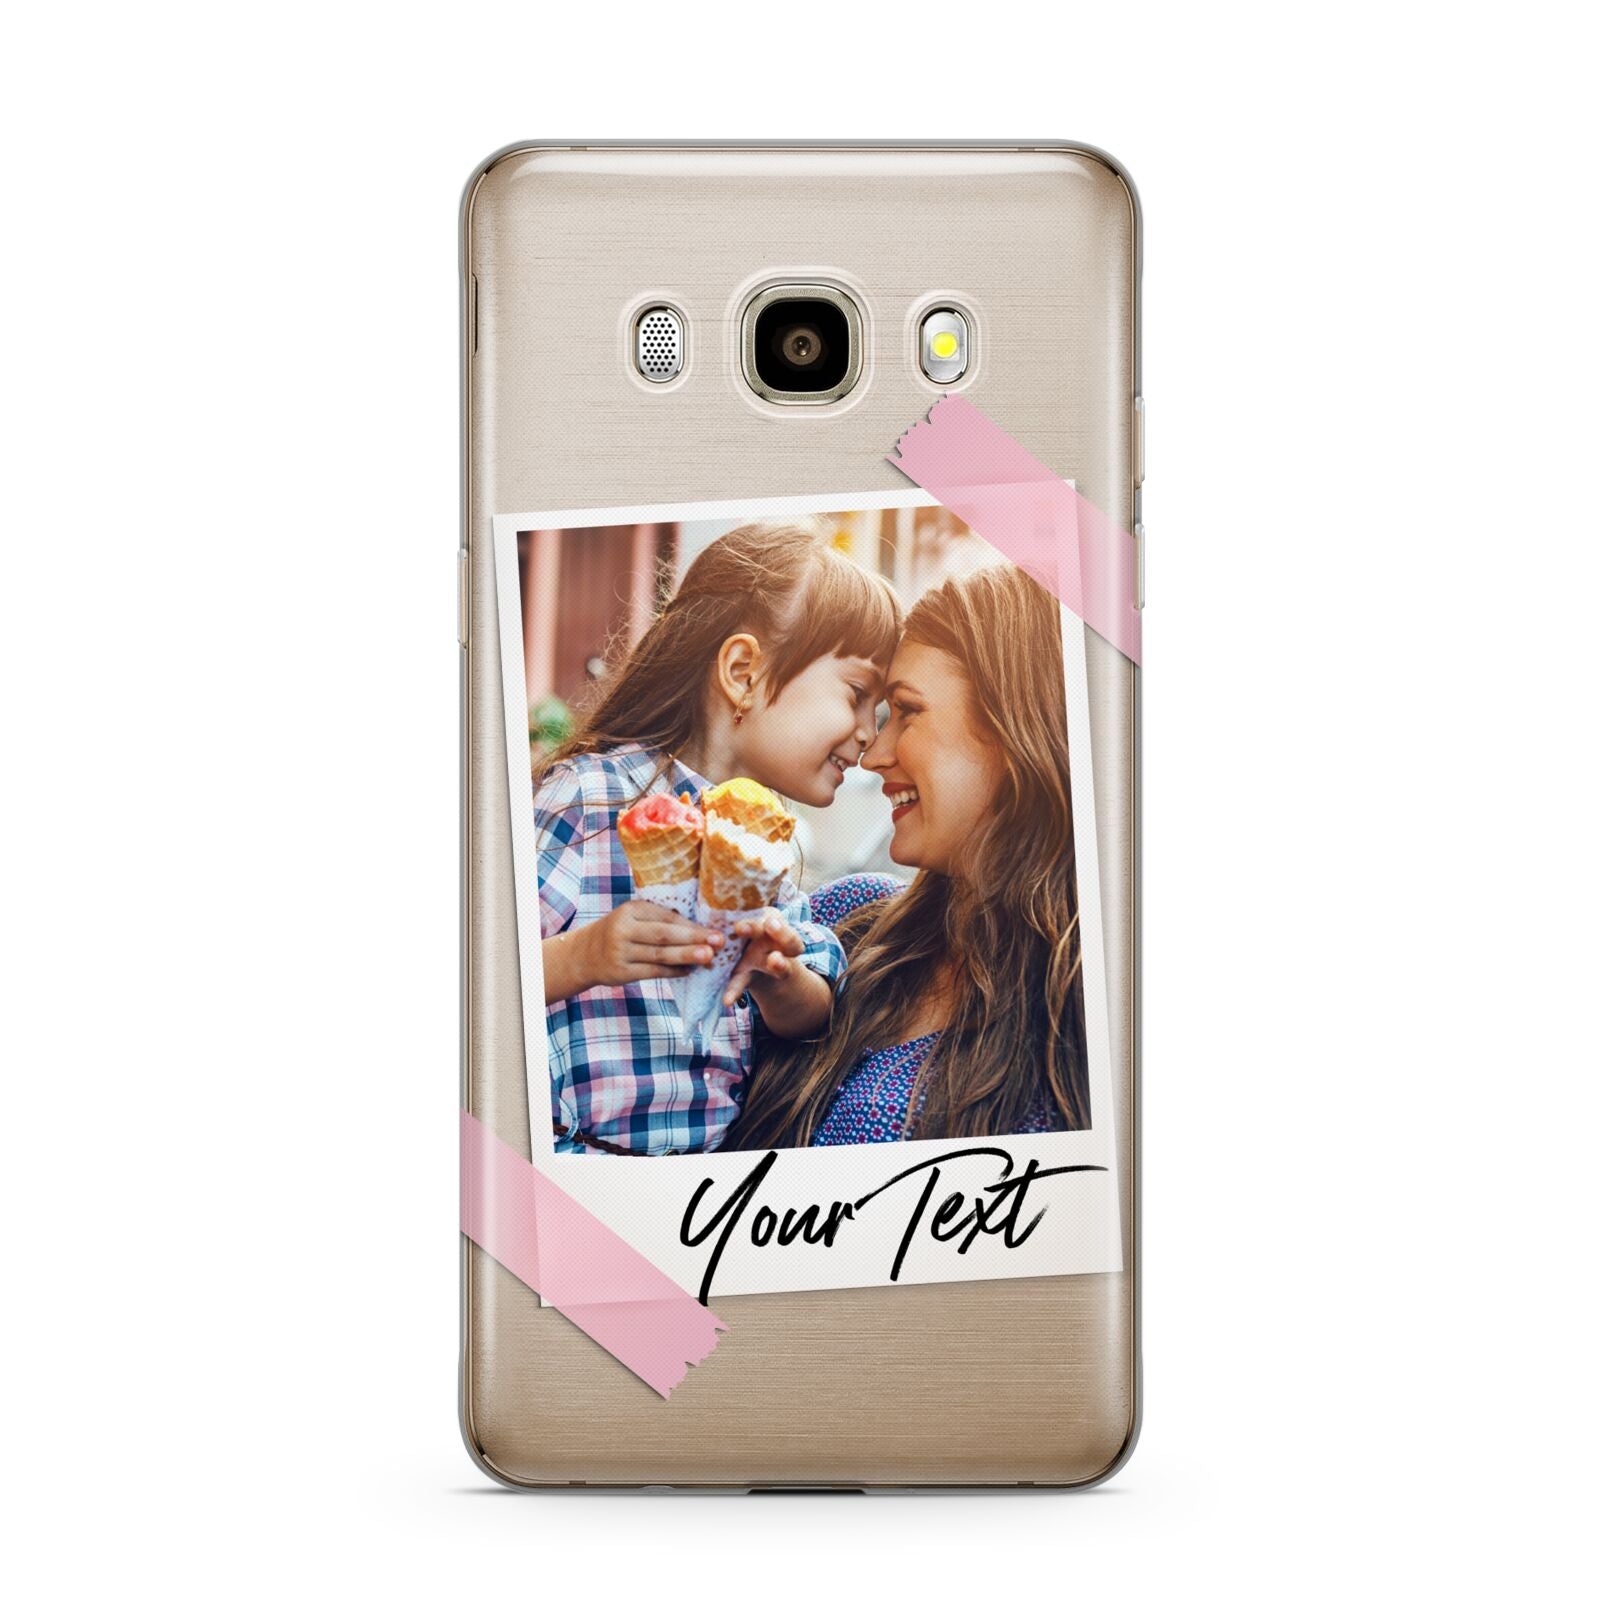 Photo Frame Samsung Galaxy J7 2016 Case on gold phone